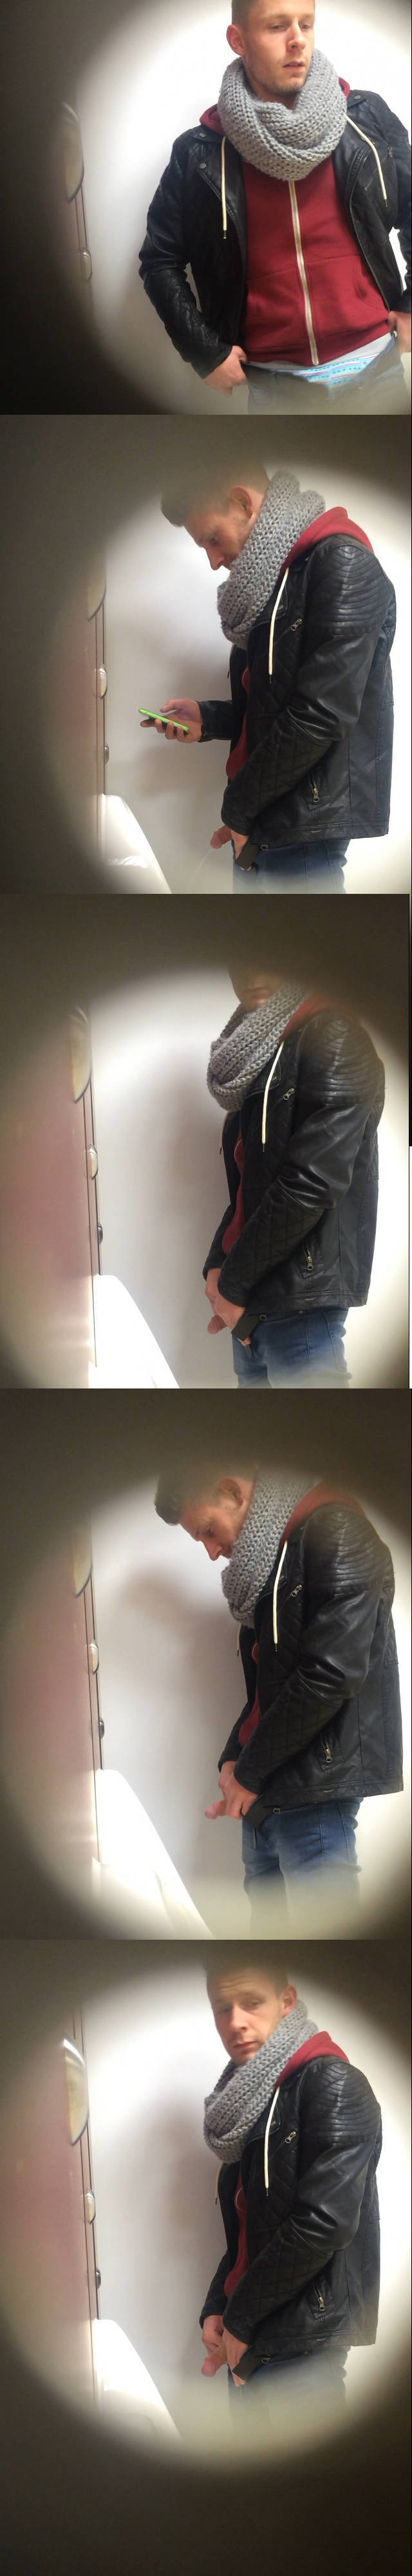 hidden cam guy caught peeing public urinal